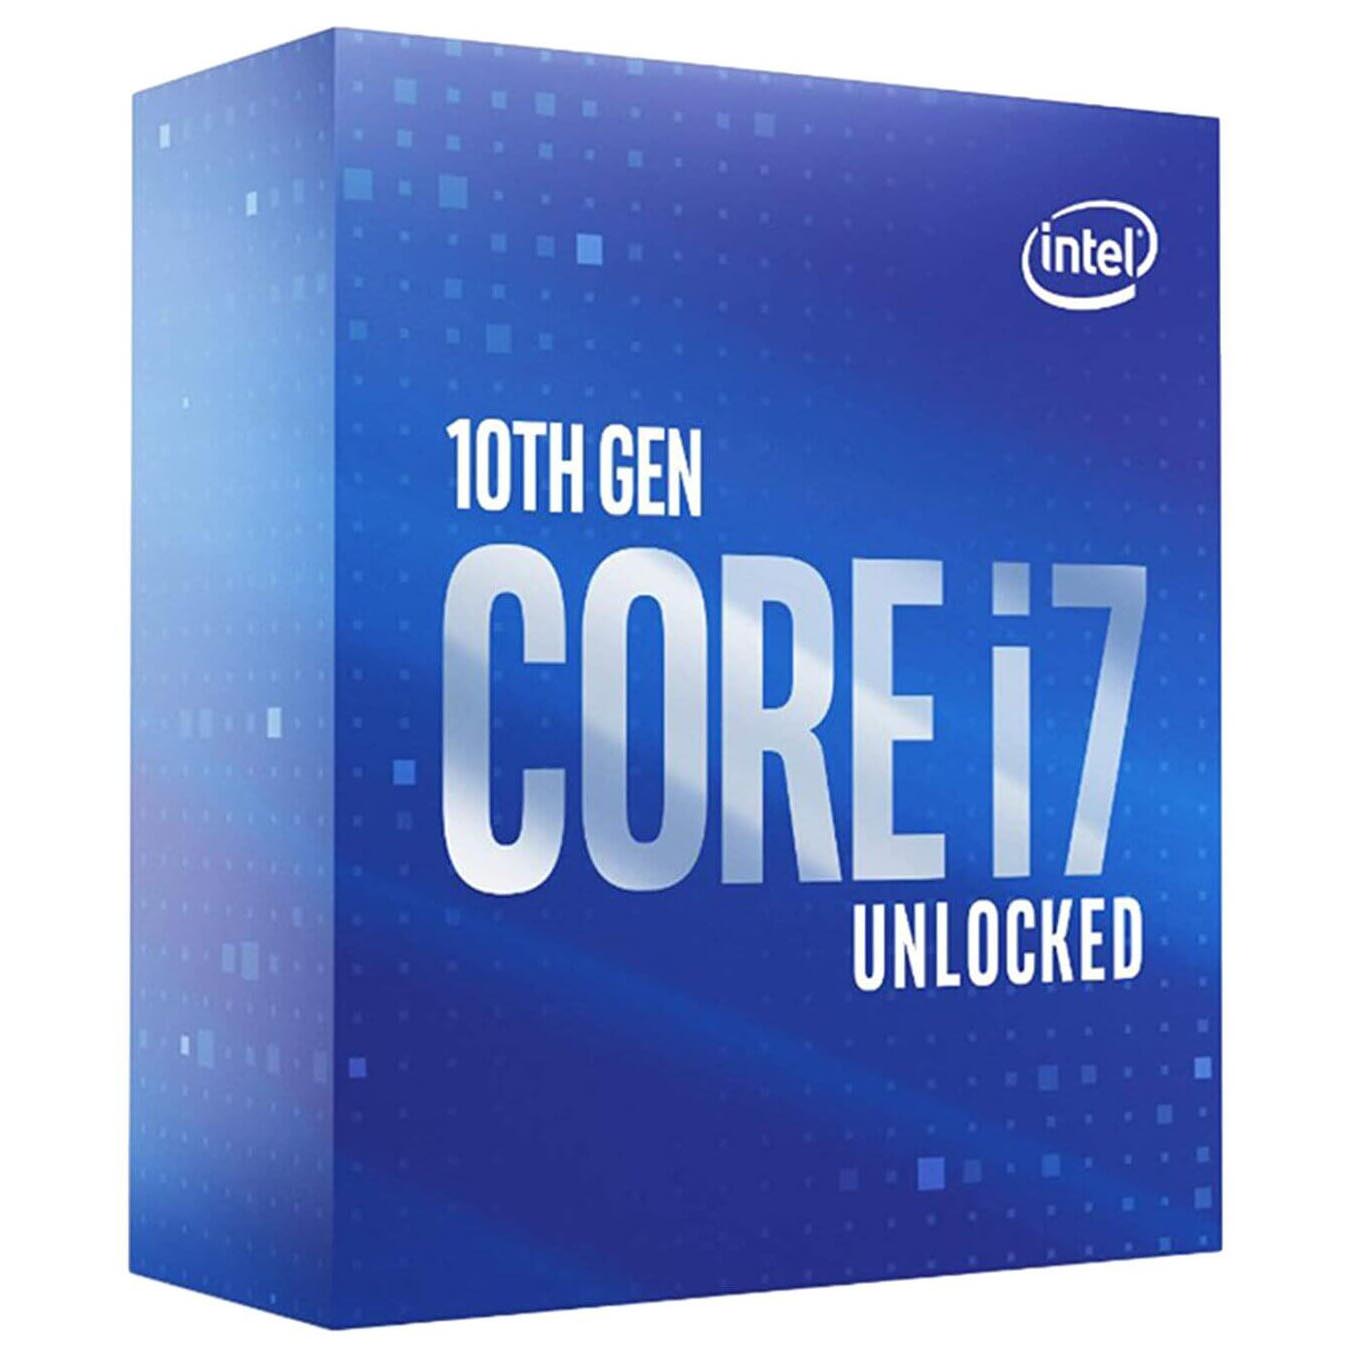 Процессор Intel Core i7-10700K BOX (без кулера), LGA 1200 процессор intel core i7 10700kf 3800 мгц intel lga 1200 box